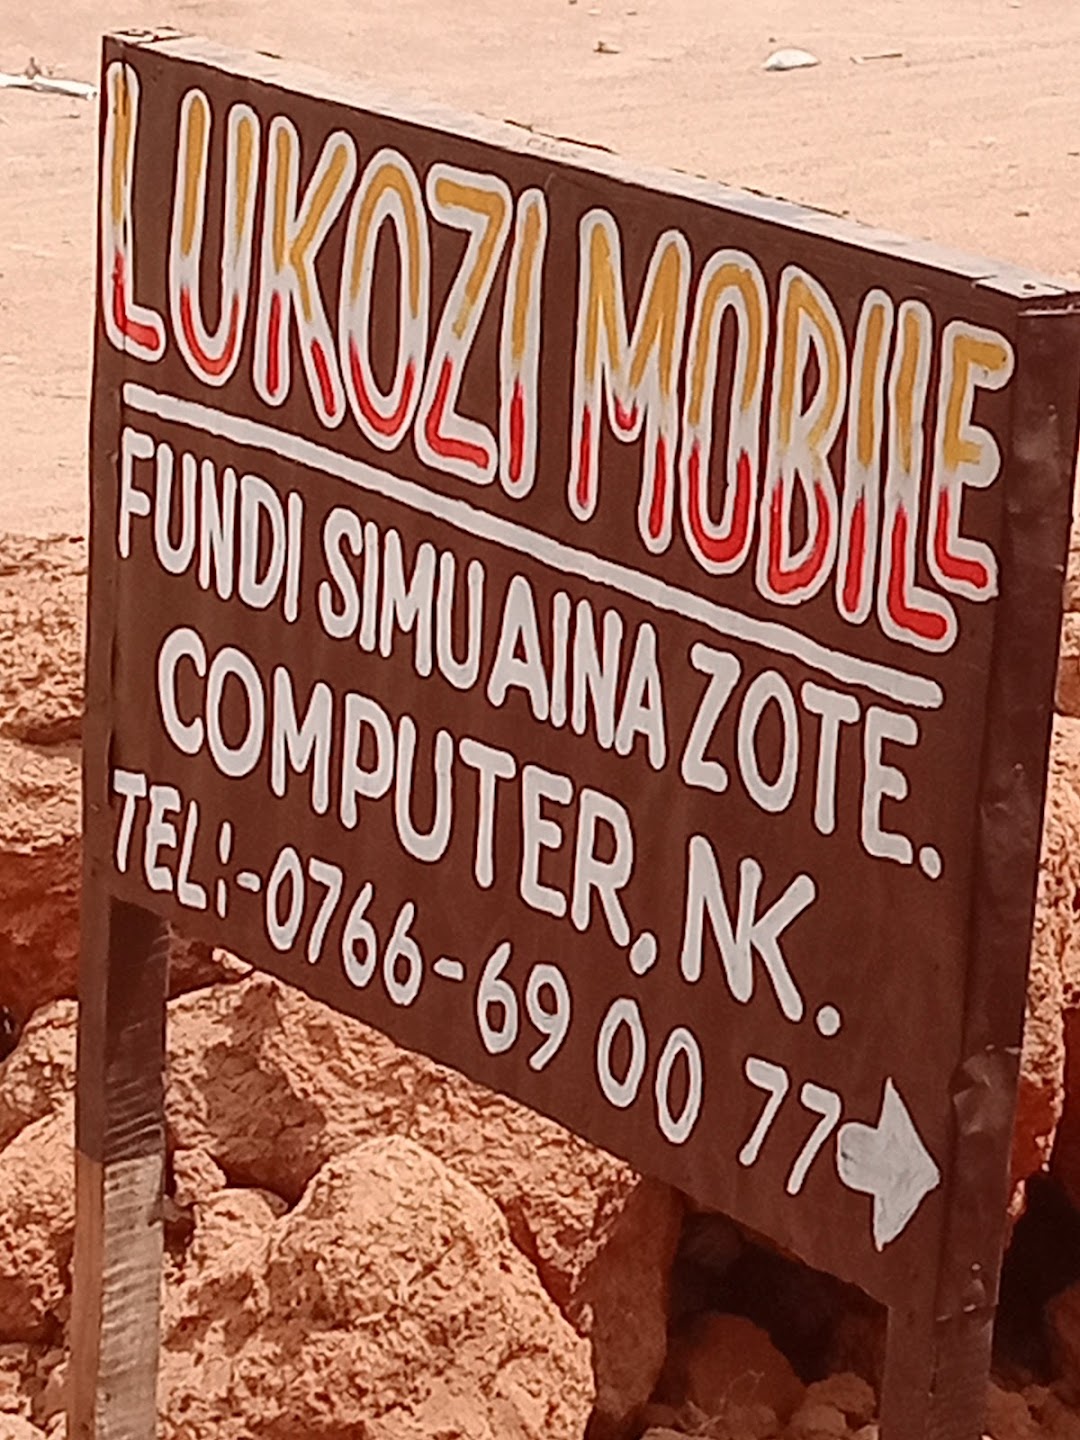 Lukozi mobile fundi simu & computer N.k